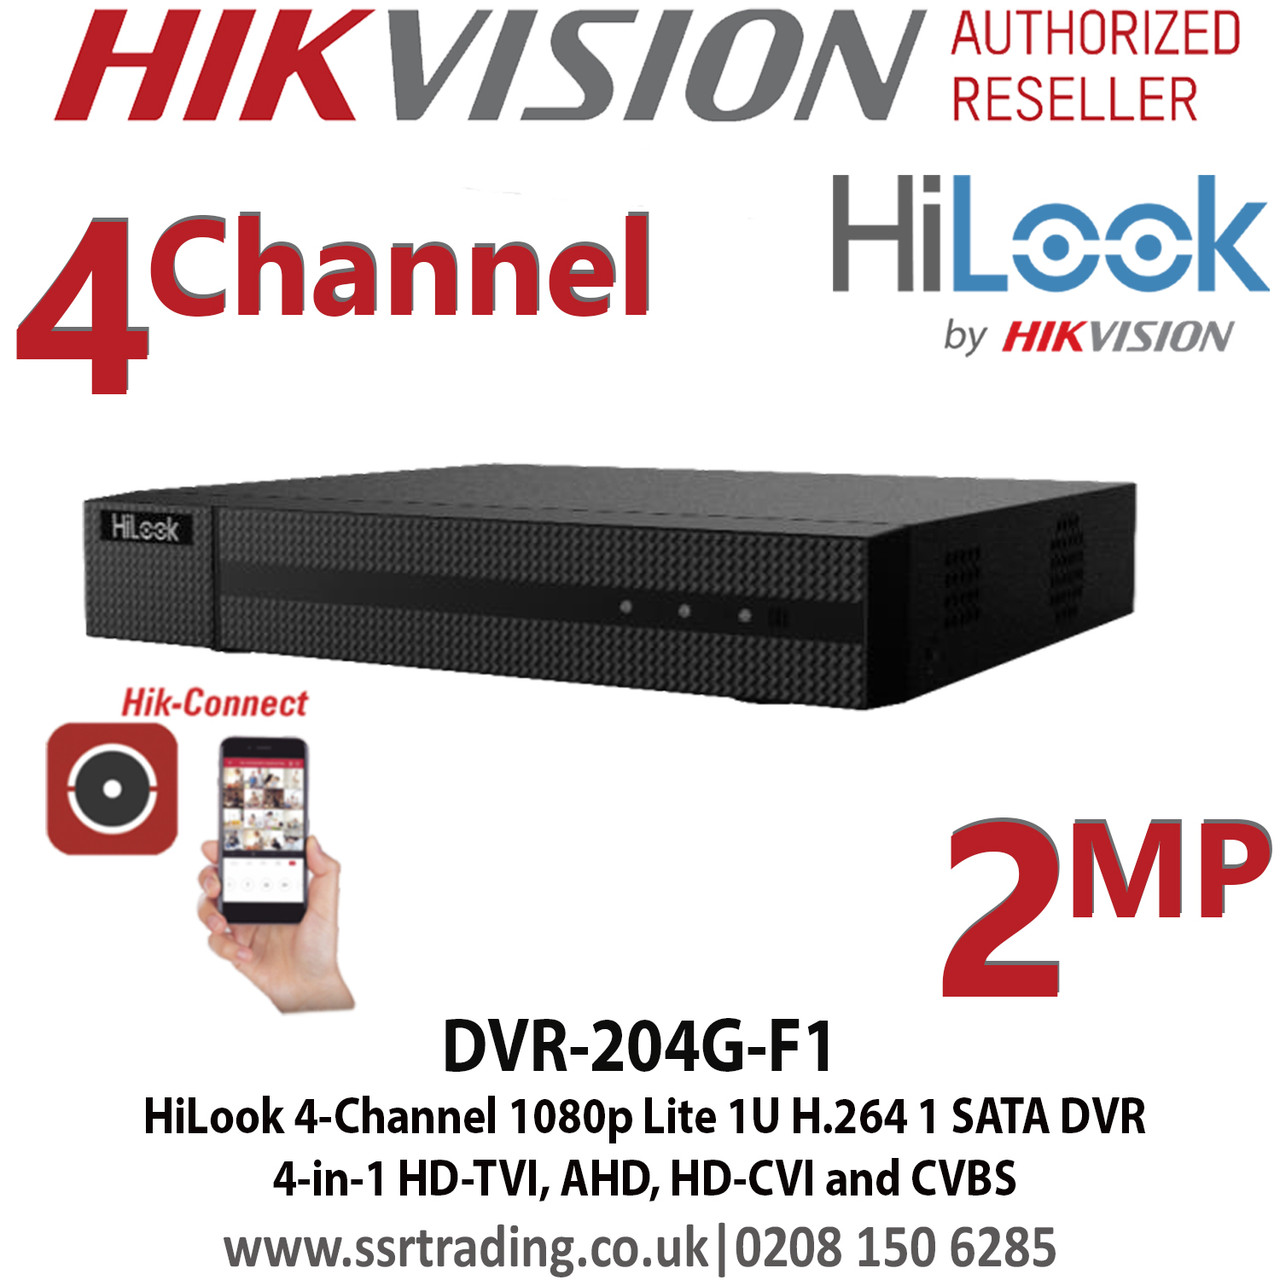 HiLook 4-Channel 1080p Lite 1U H.264 DVR, 4 signals input adaptively  HDTVI/AHD/CVI/CVBS - DVR-204G-F1